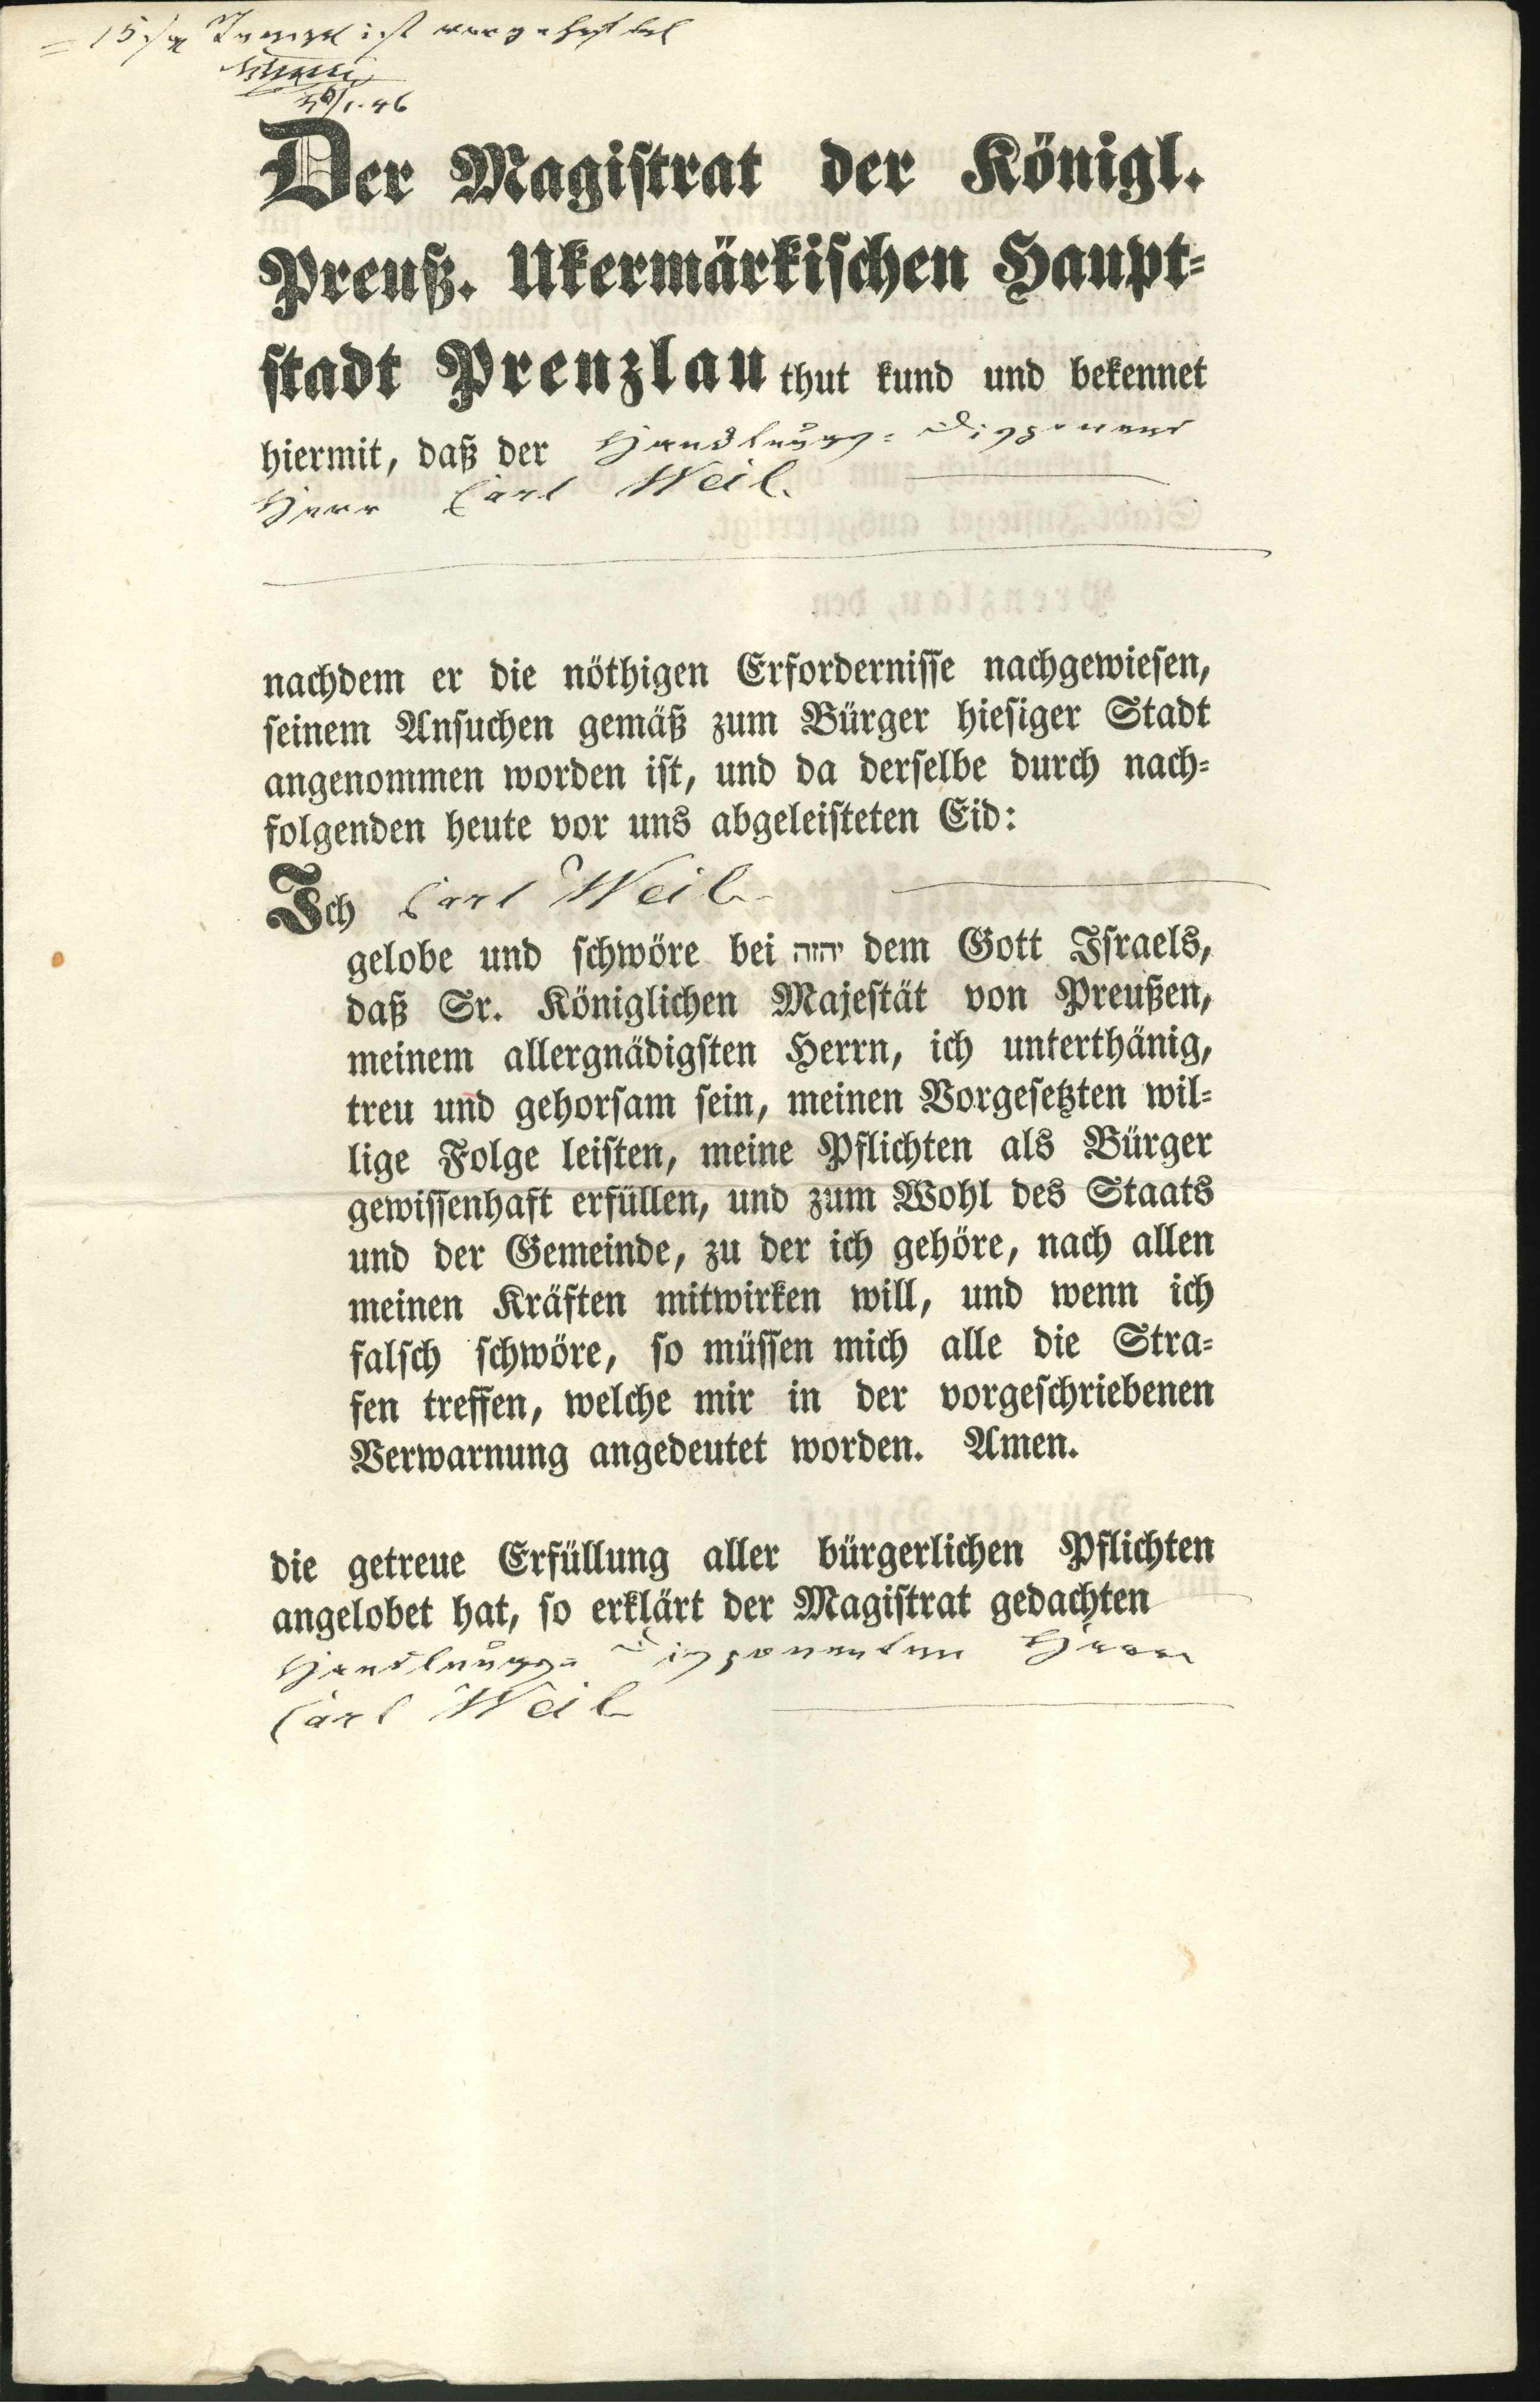 Bürgerbrief für den Handlungs-Disponenten Carl Weil, 1846 (KTL CC BY-NC-SA)